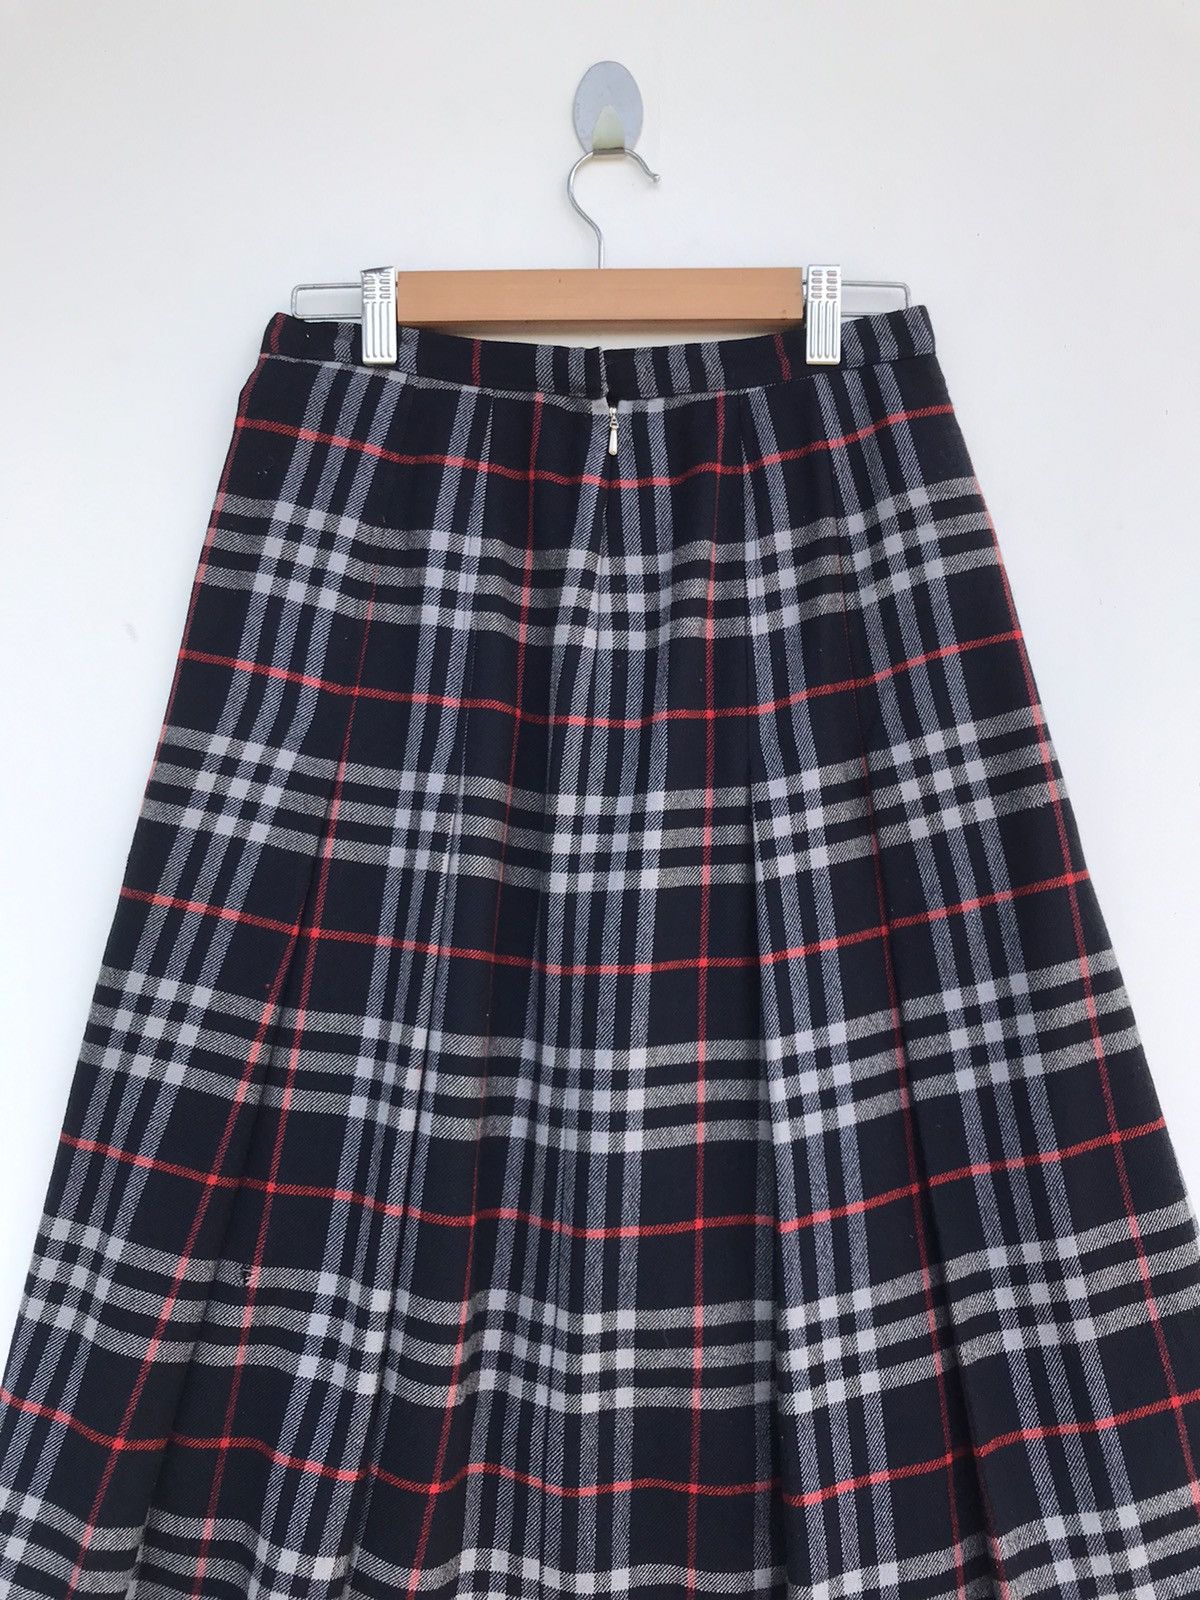 Burberry Nova Check Skirt - 4